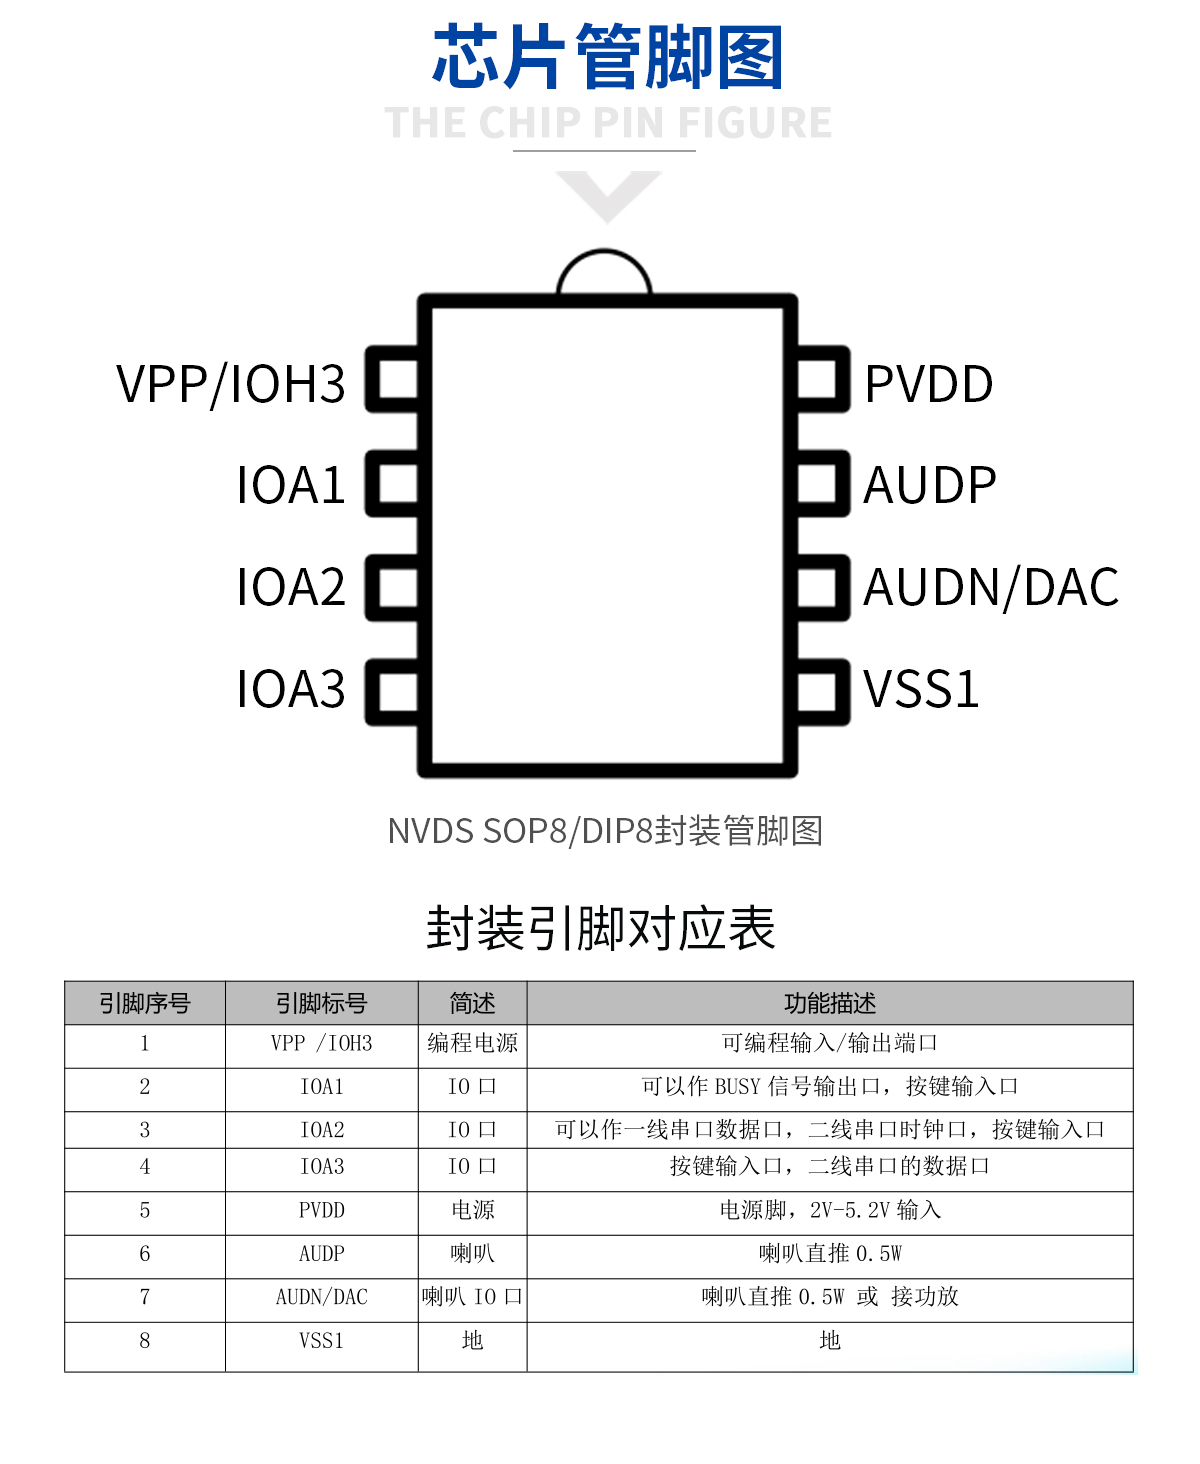 NVDS系列语音芯片